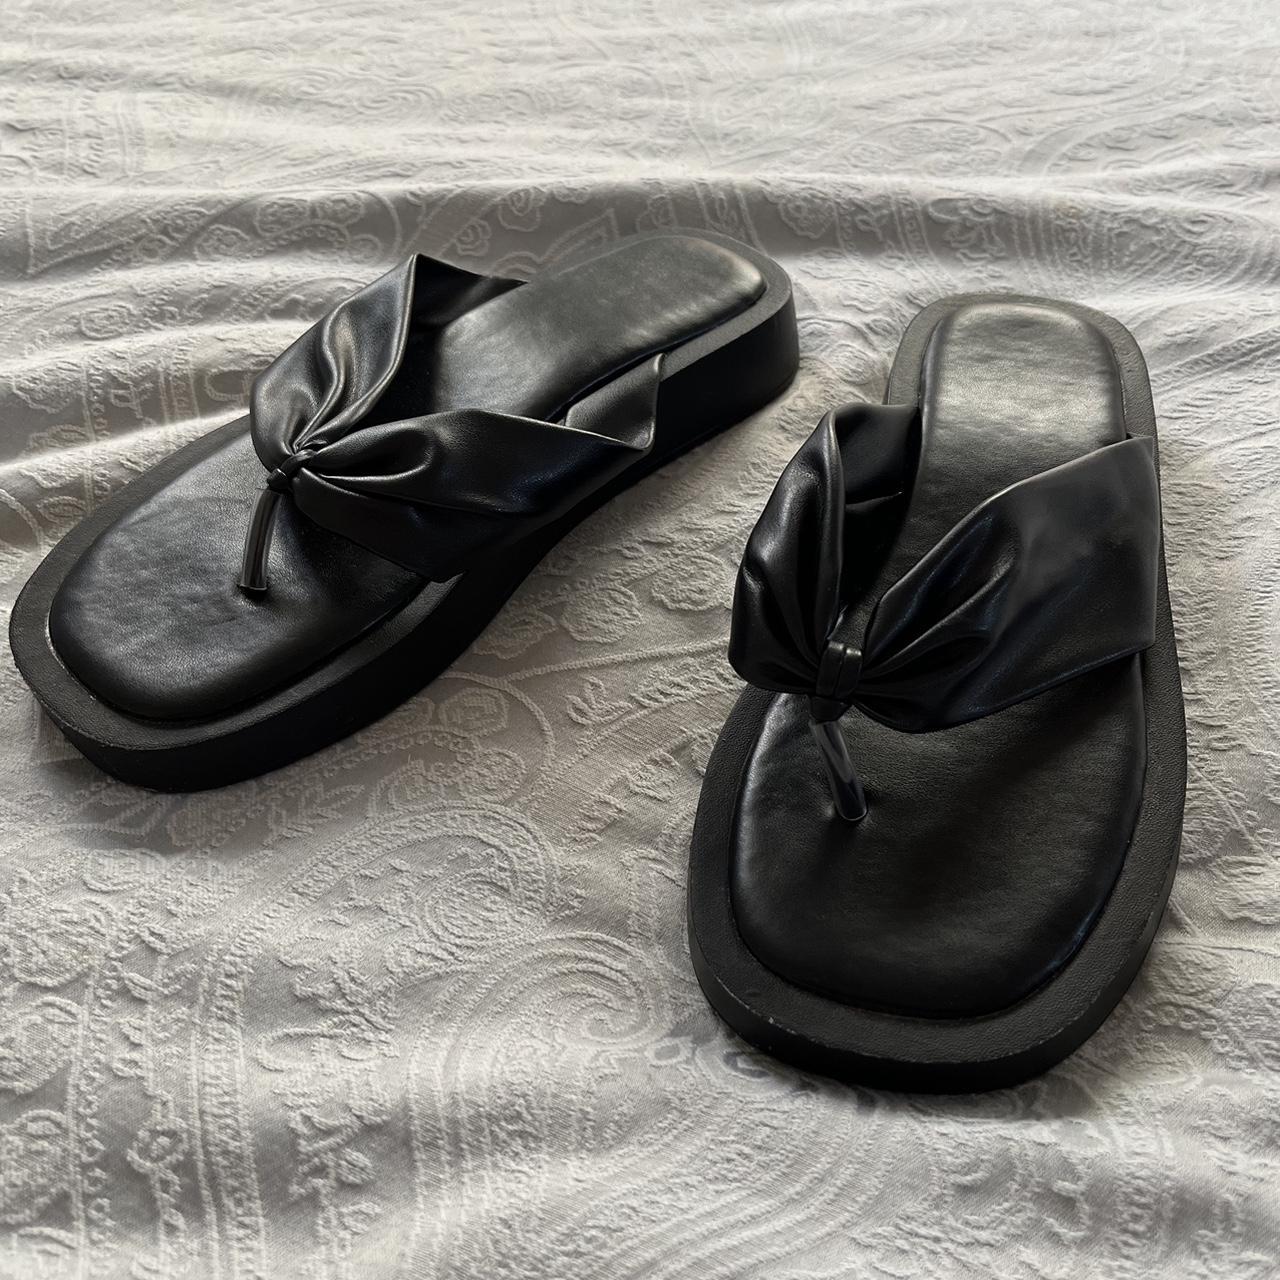 Black chunky flip flops, worn a few times